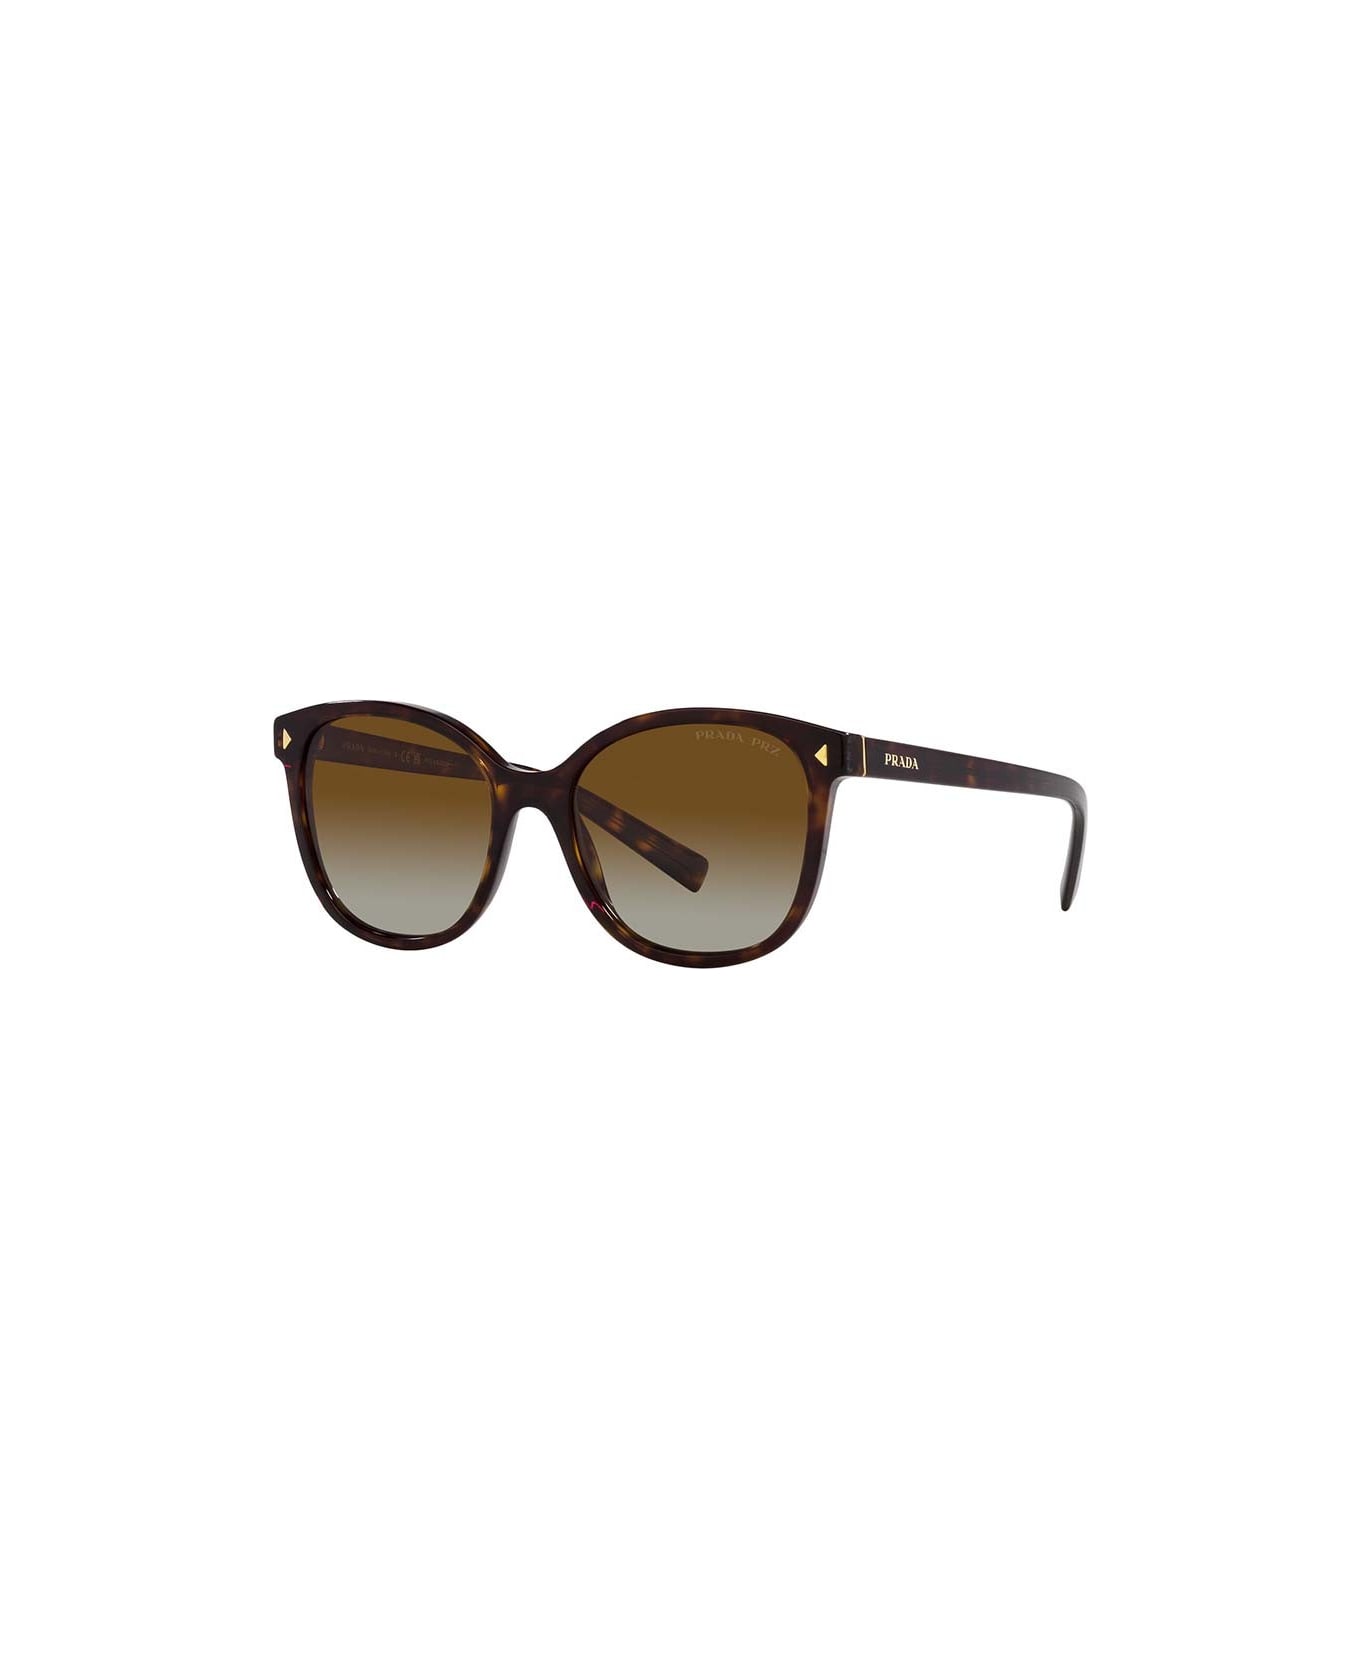 Prada Eyewear Sunglasses - 2AU6E1 サングラス